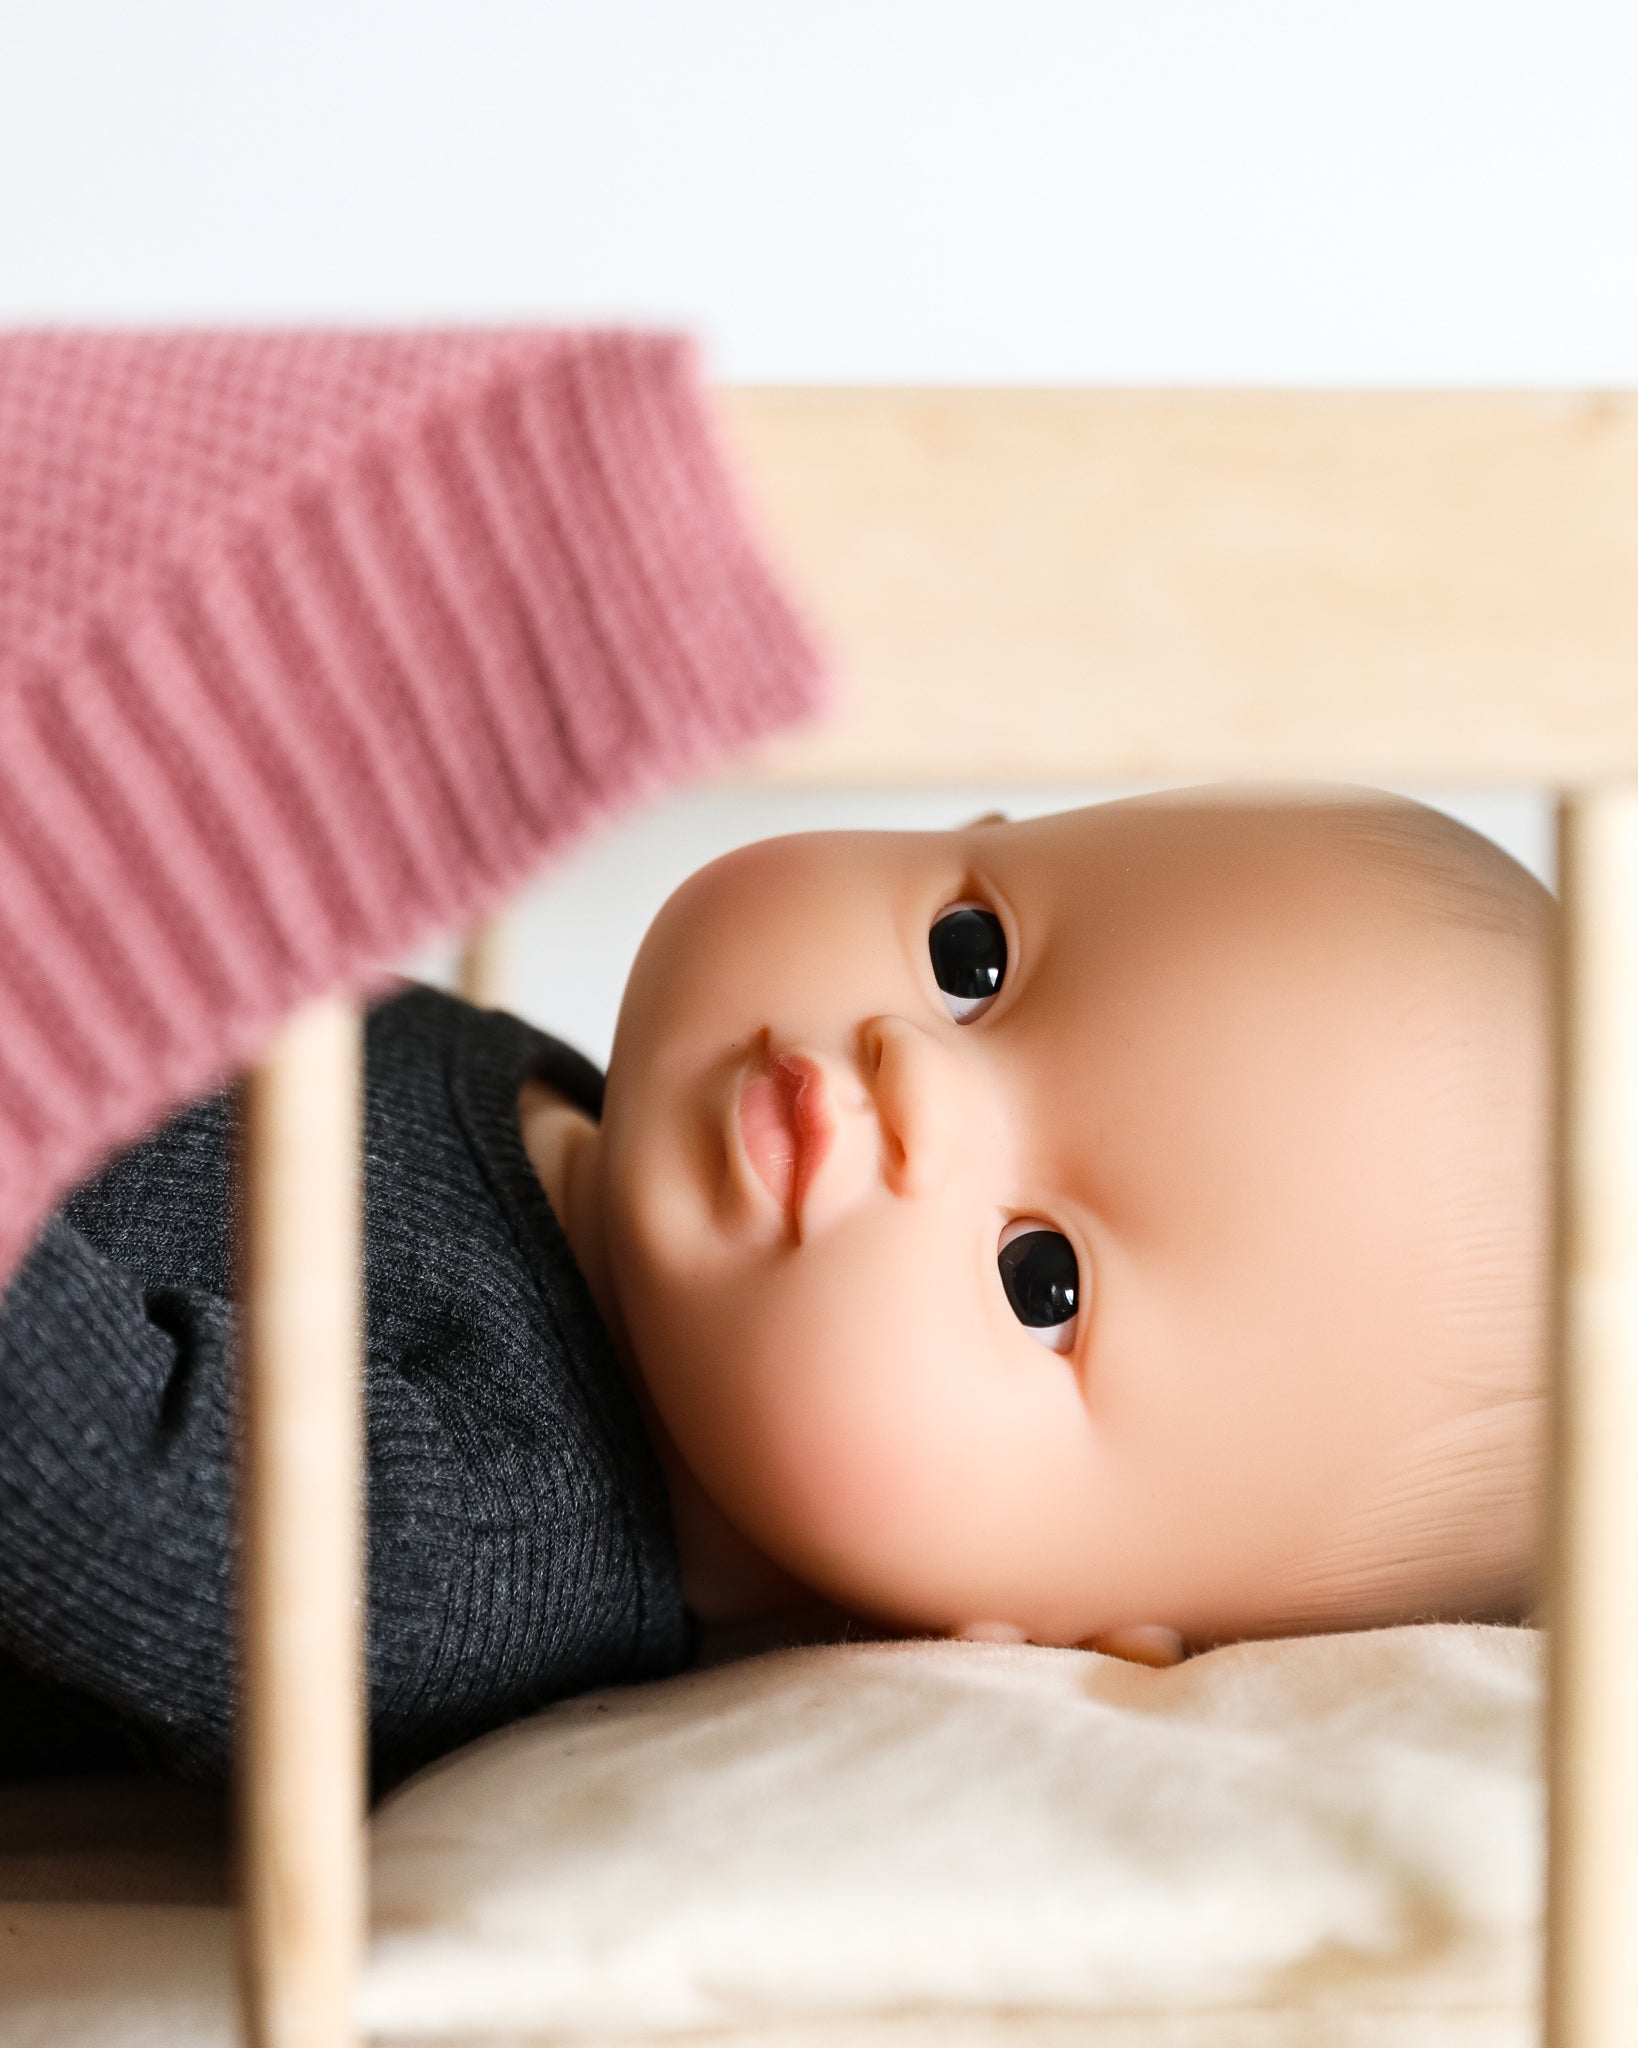 Minikane Doll - Asian Baby Boy Doll